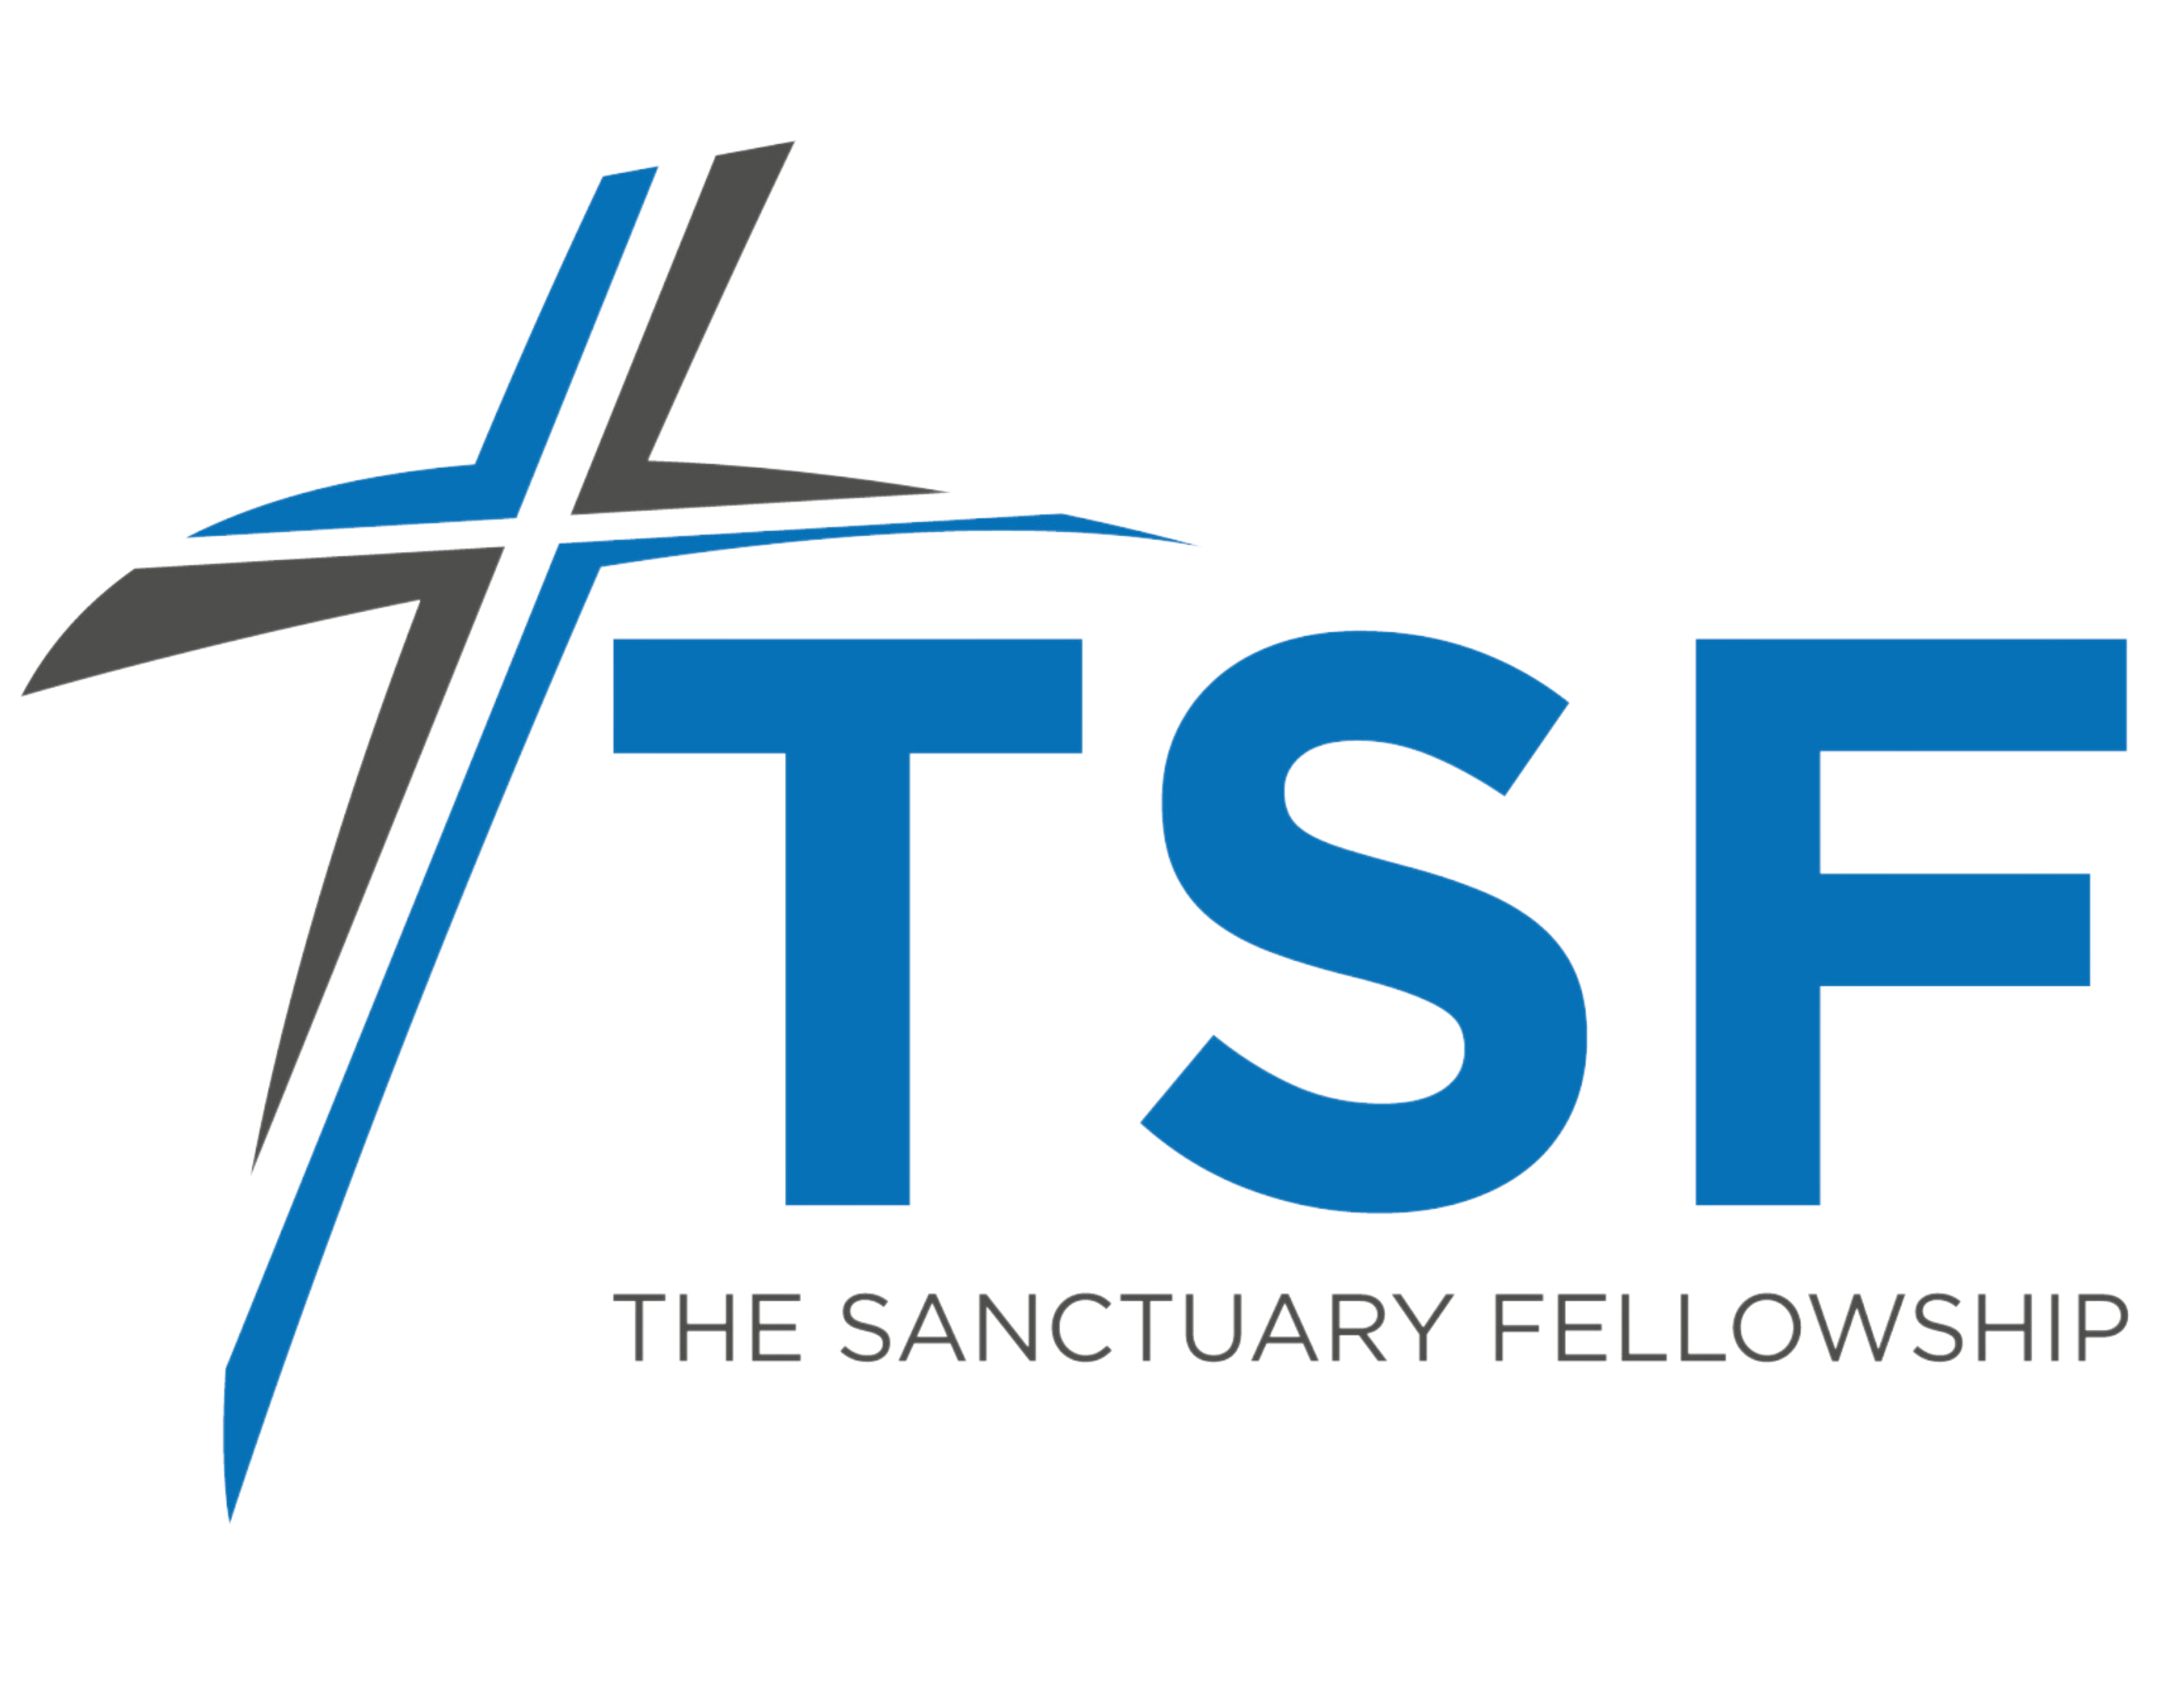 The Sanctuary Fellowship